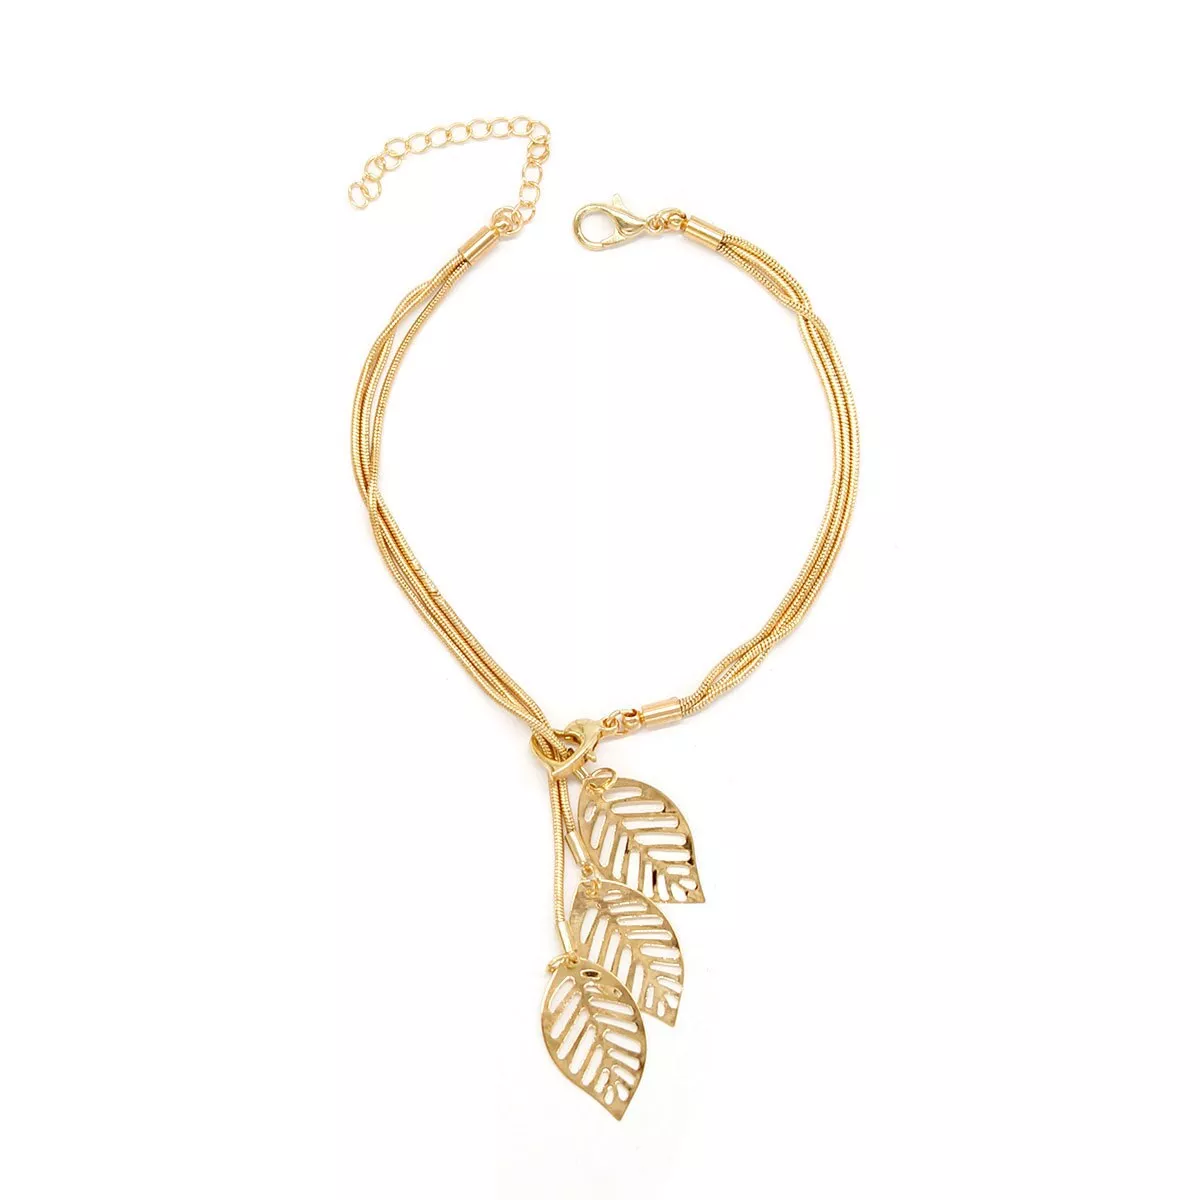 pulseira-moda-feminina-joias-ouro-malha-de-arame-liga-pulseira-oco-folha